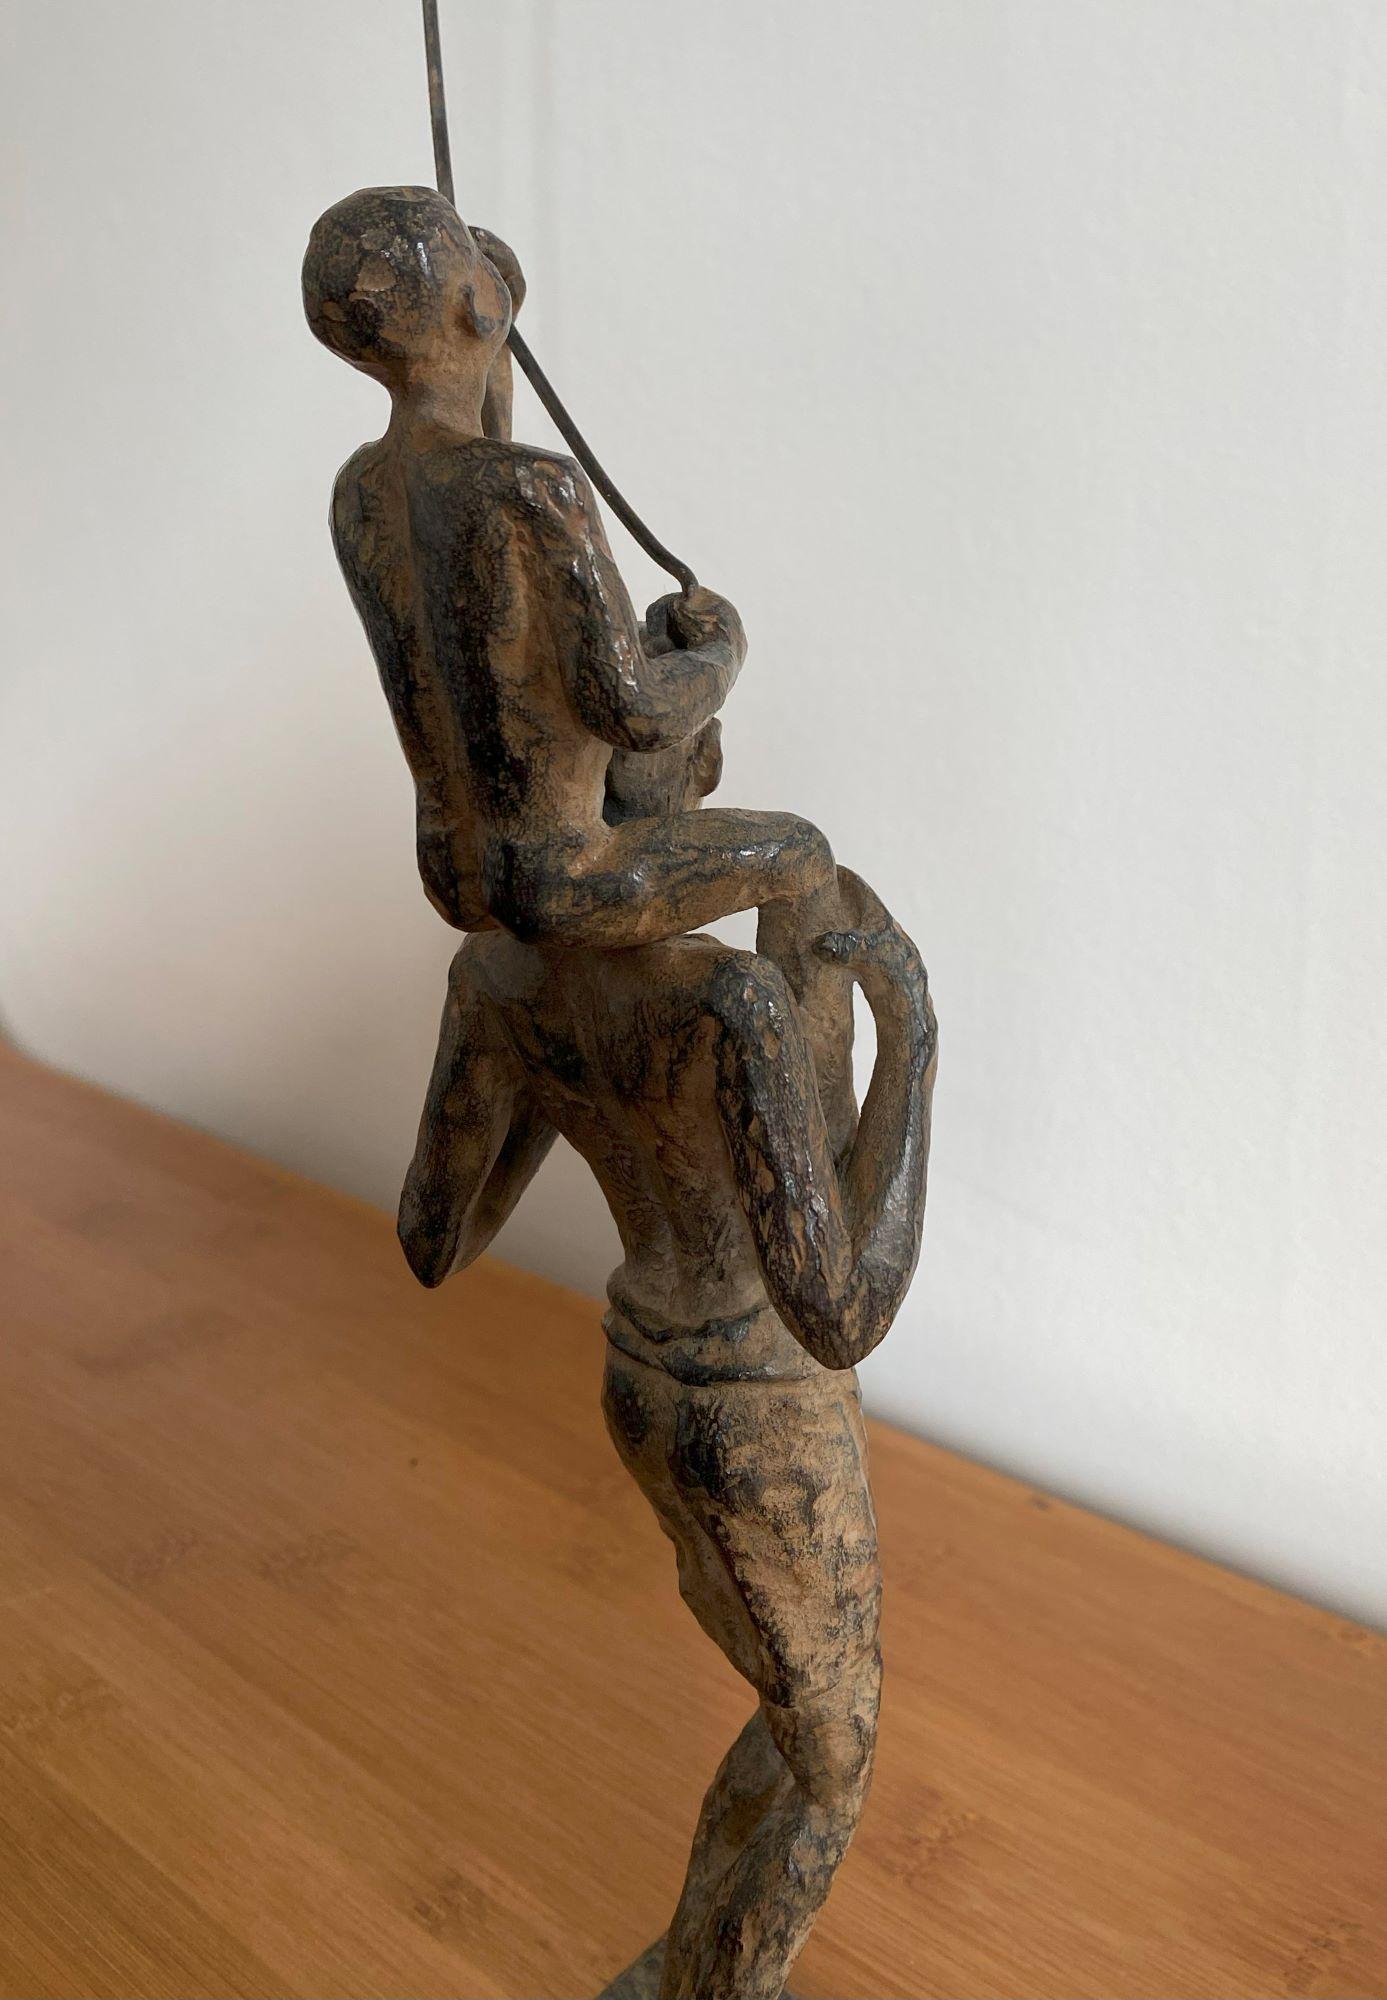 Childhood’s Sail VI by Marine de Soos - Bronze sculpture, child's figure, kite For Sale 6